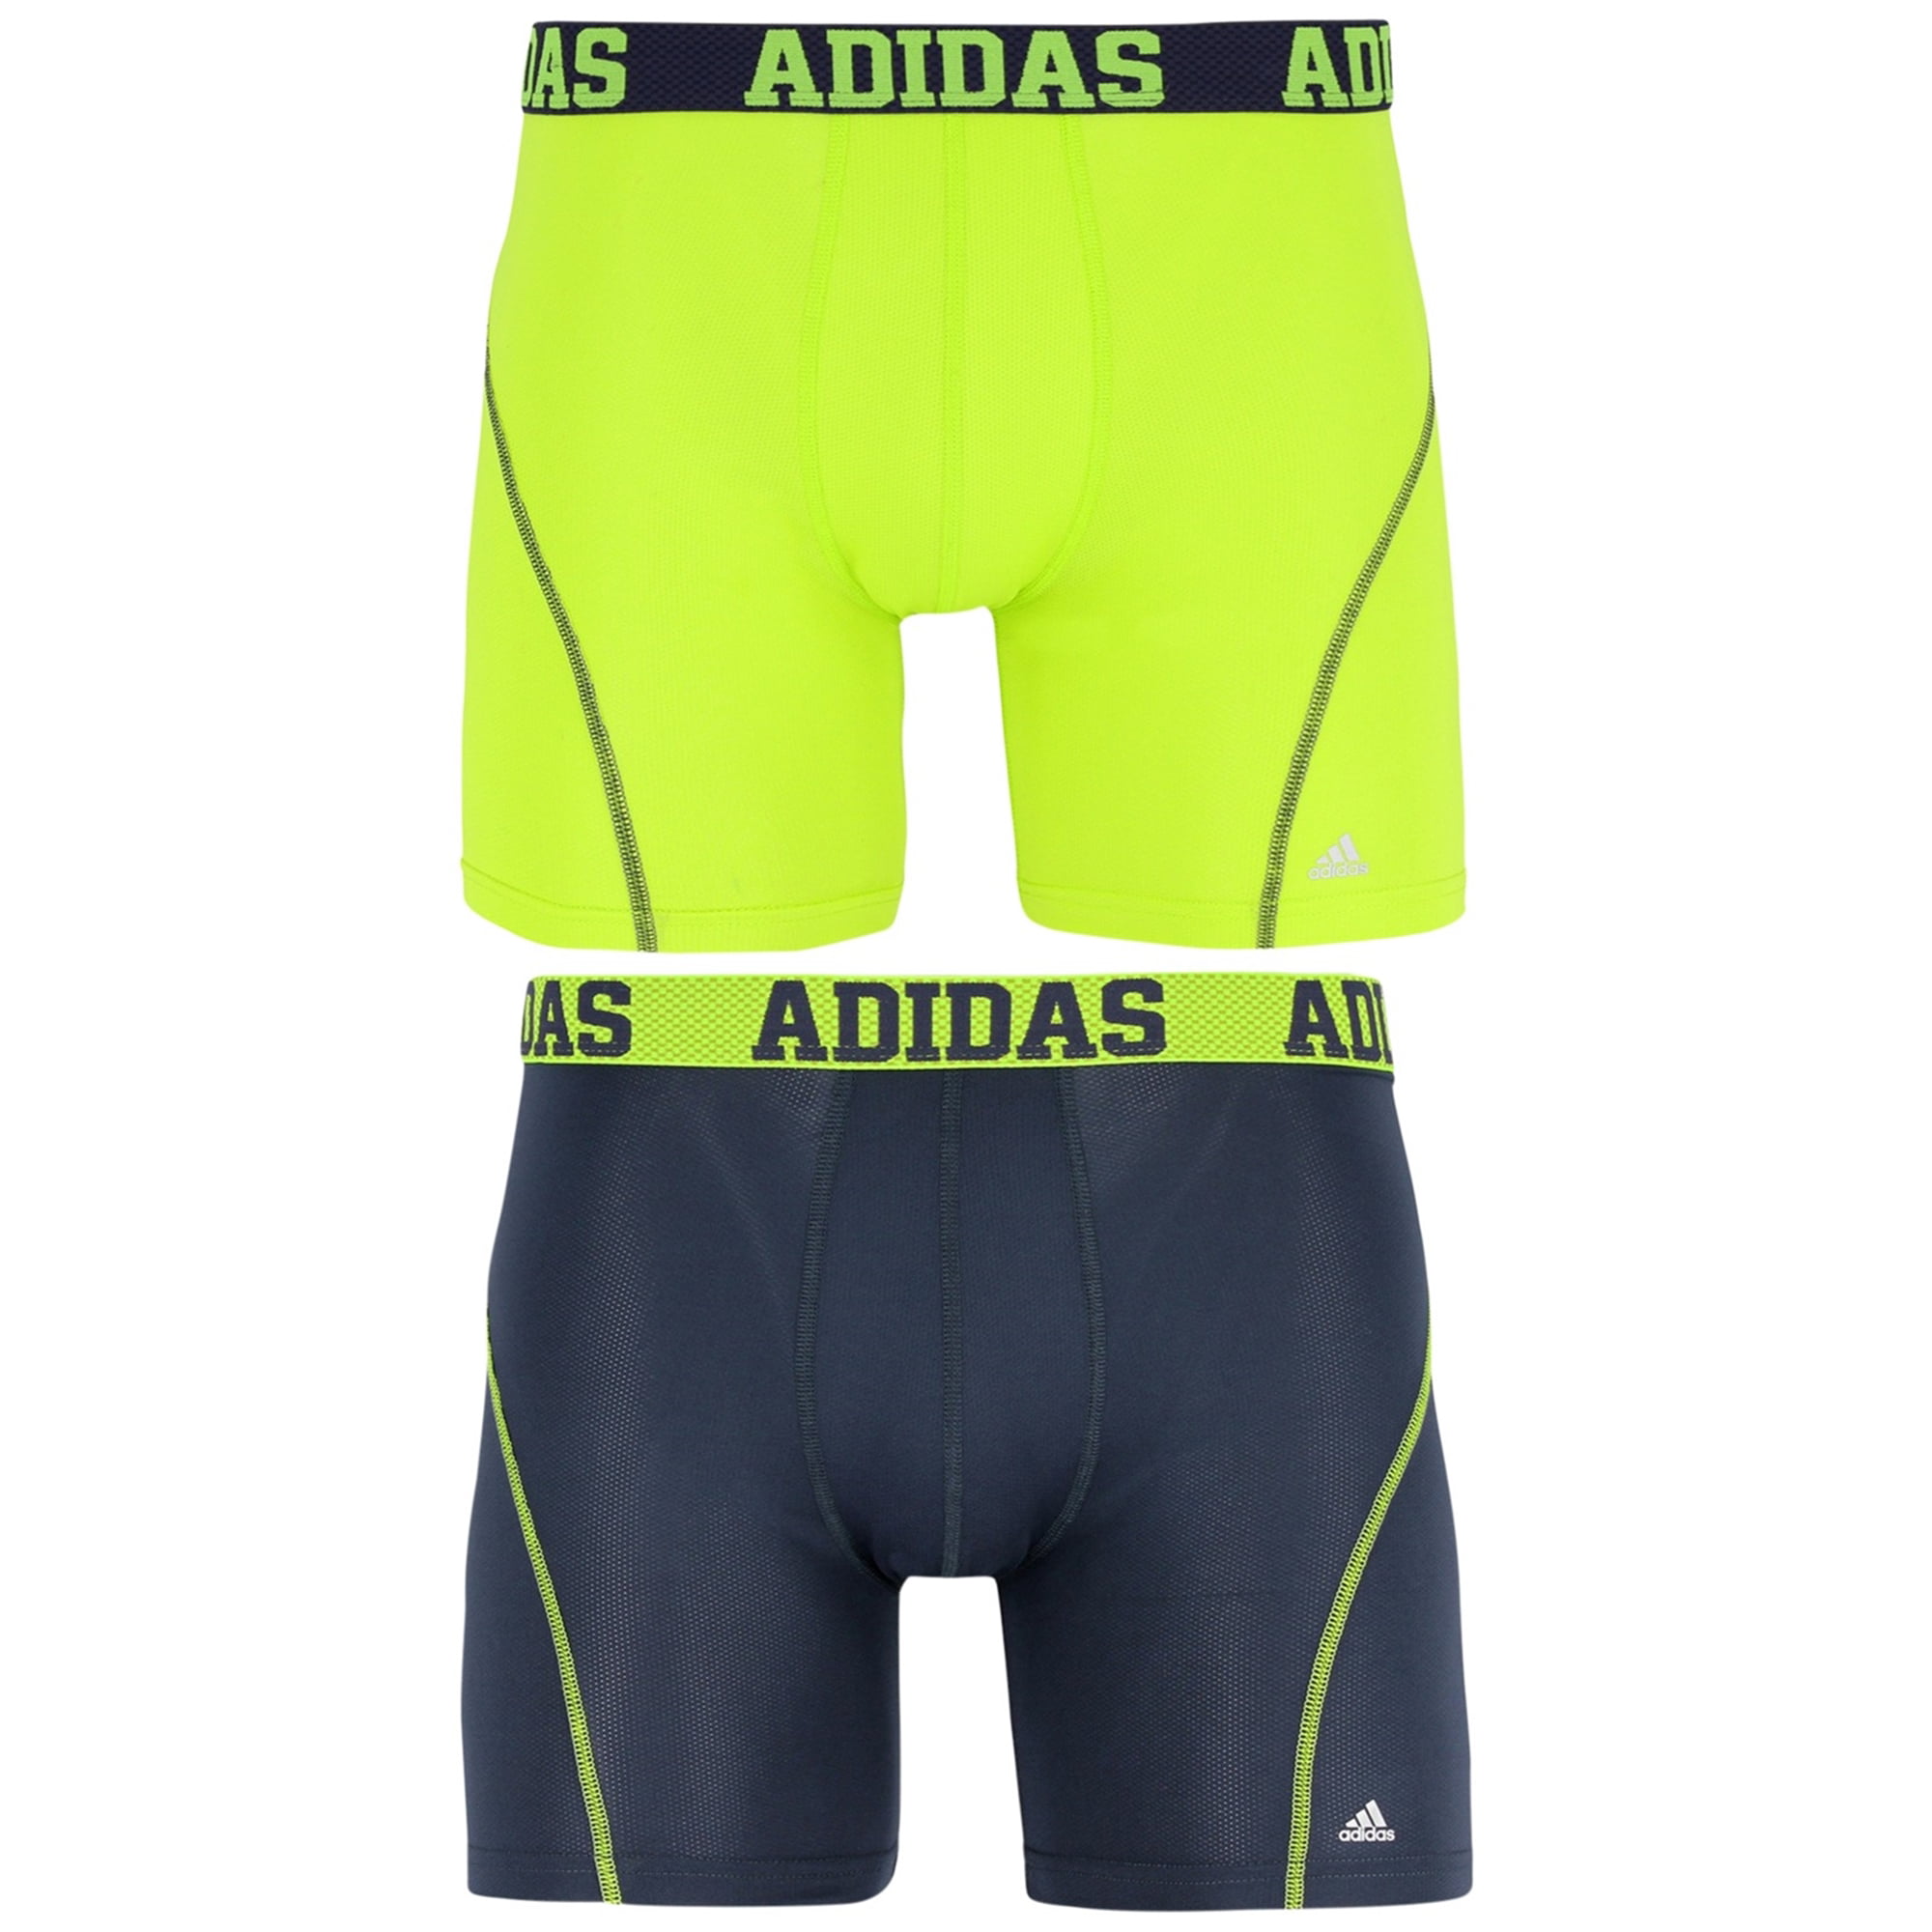 Adidas Mens 2 Pack Climacool Underwear Boxer Briefs, Multicoloured